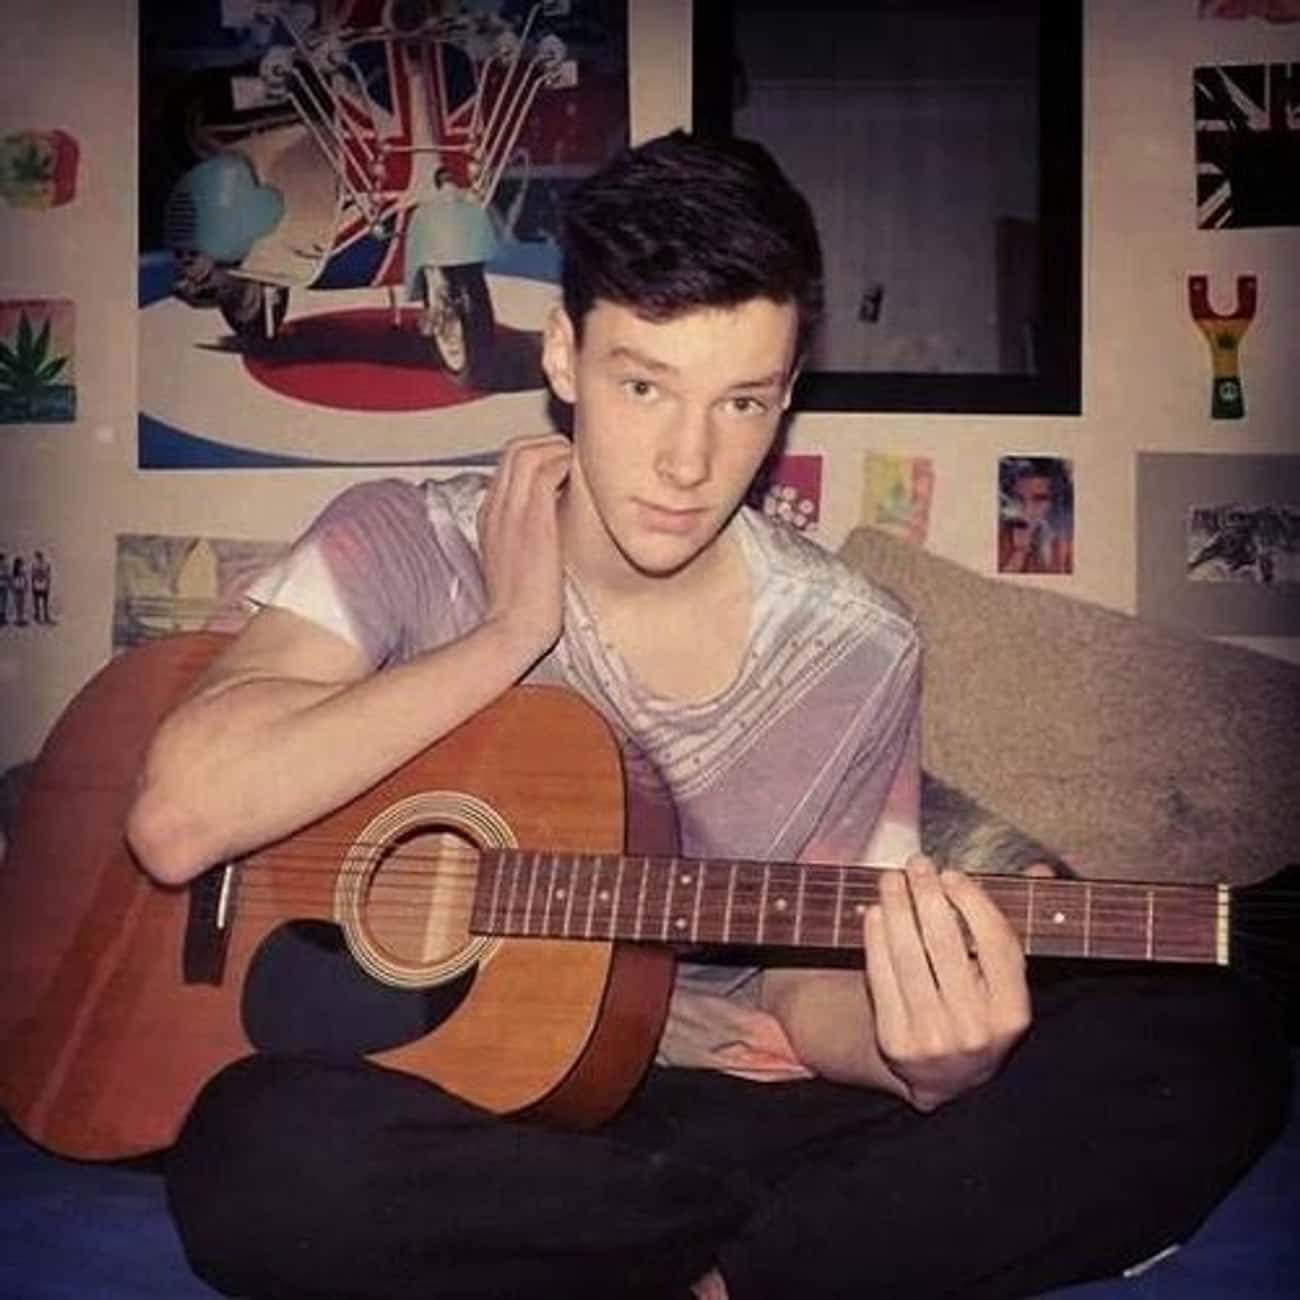 Young Benedict Cumberbatch Holding a Guitar